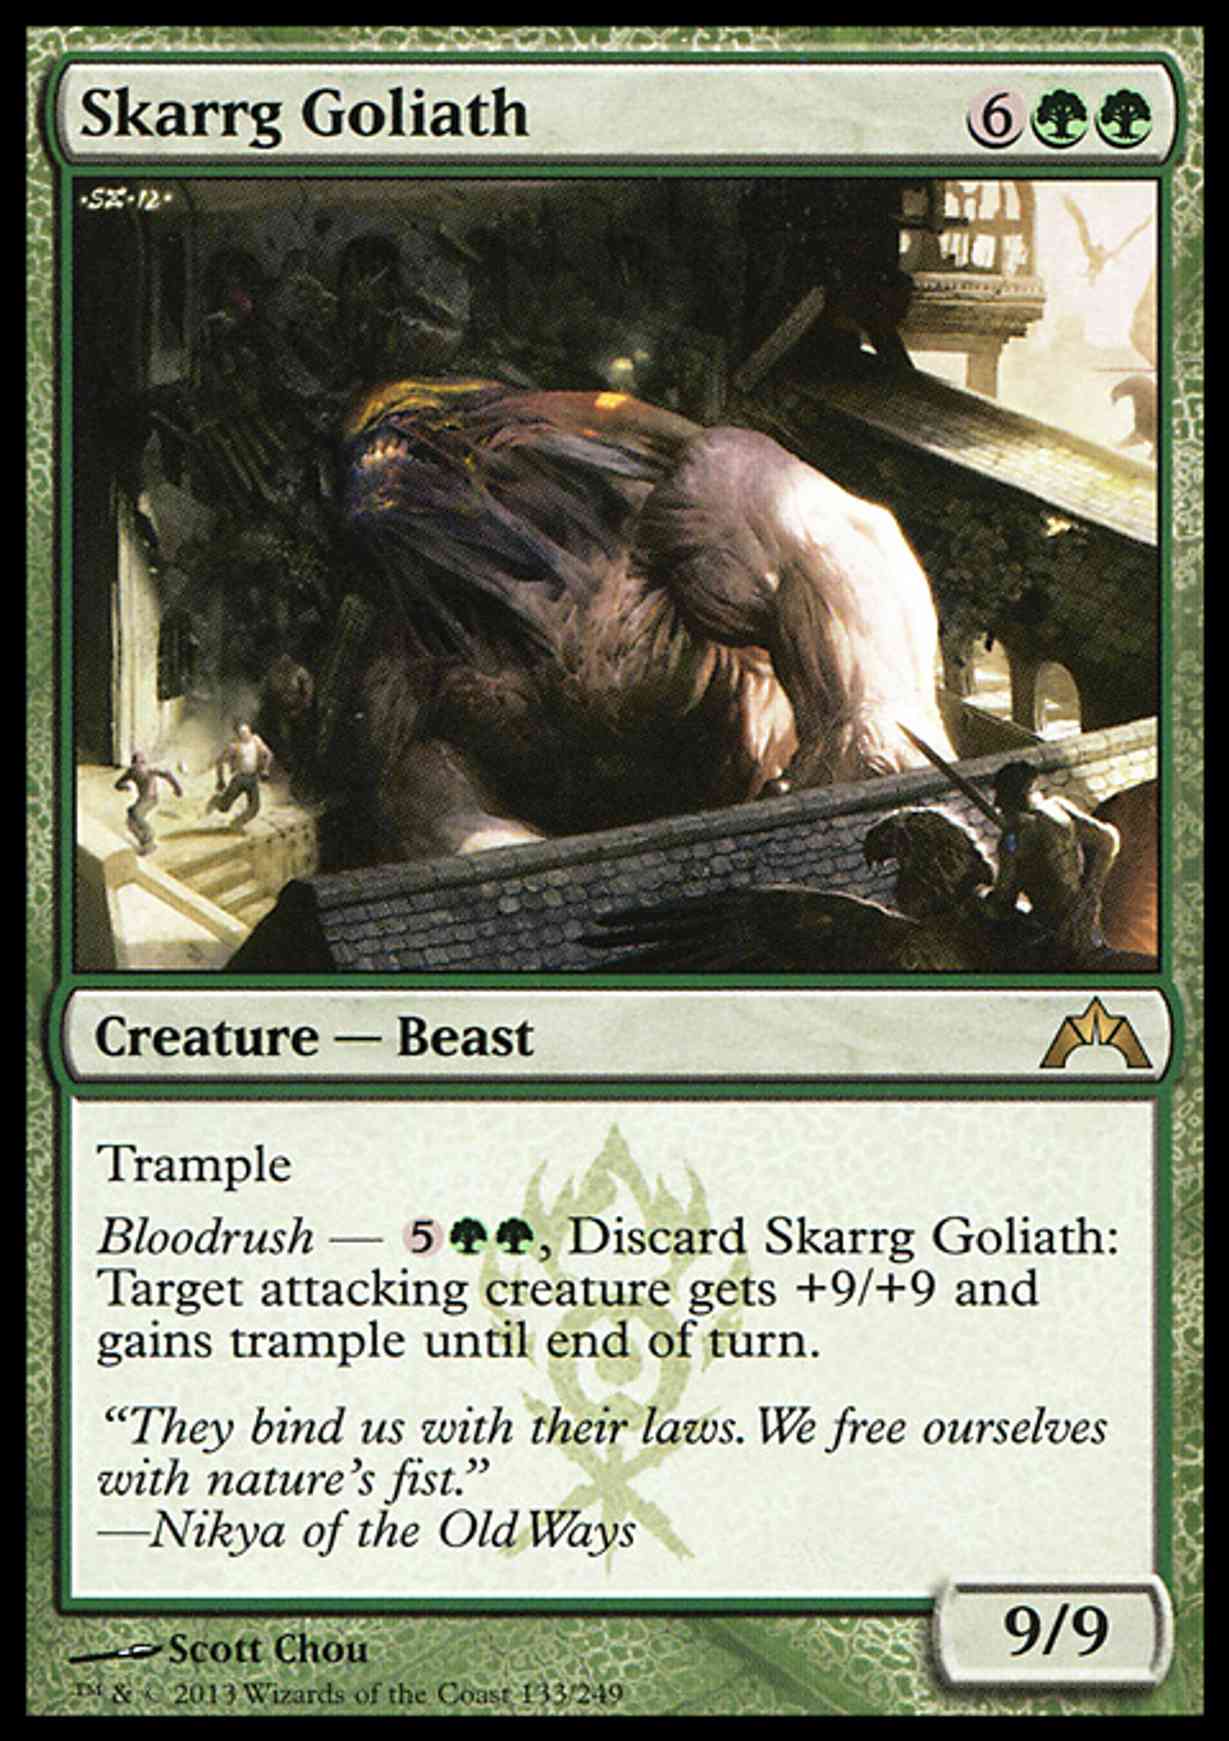 Skarrg Goliath magic card front